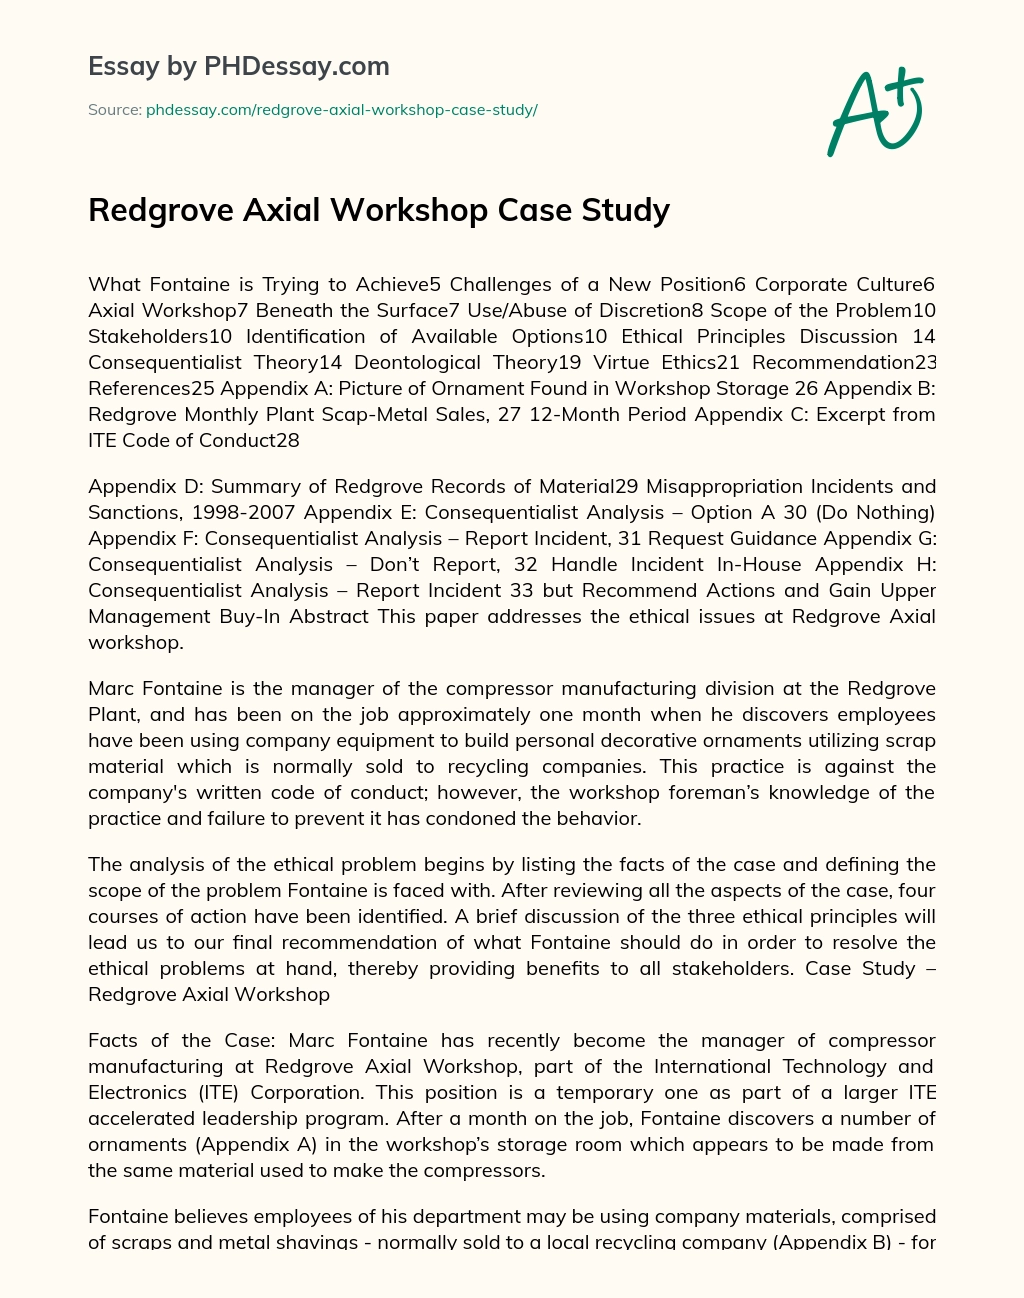 Redgrove Axial Workshop Case Study essay